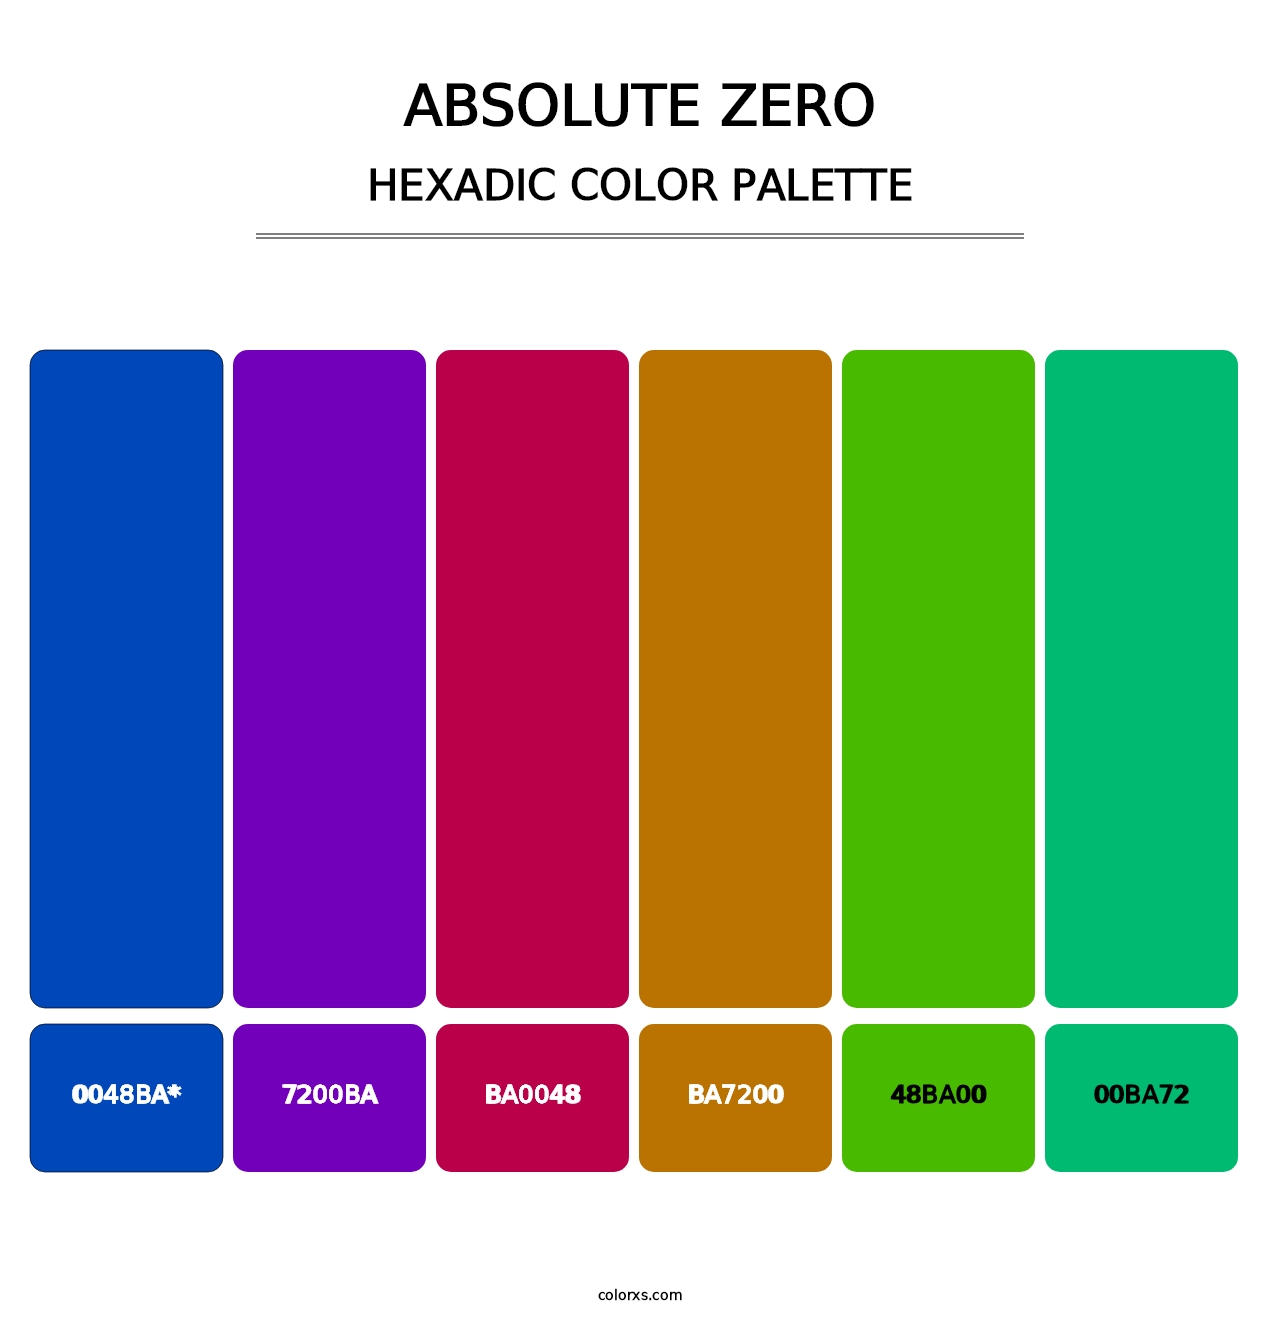 Absolute Zero - Hexadic Color Palette